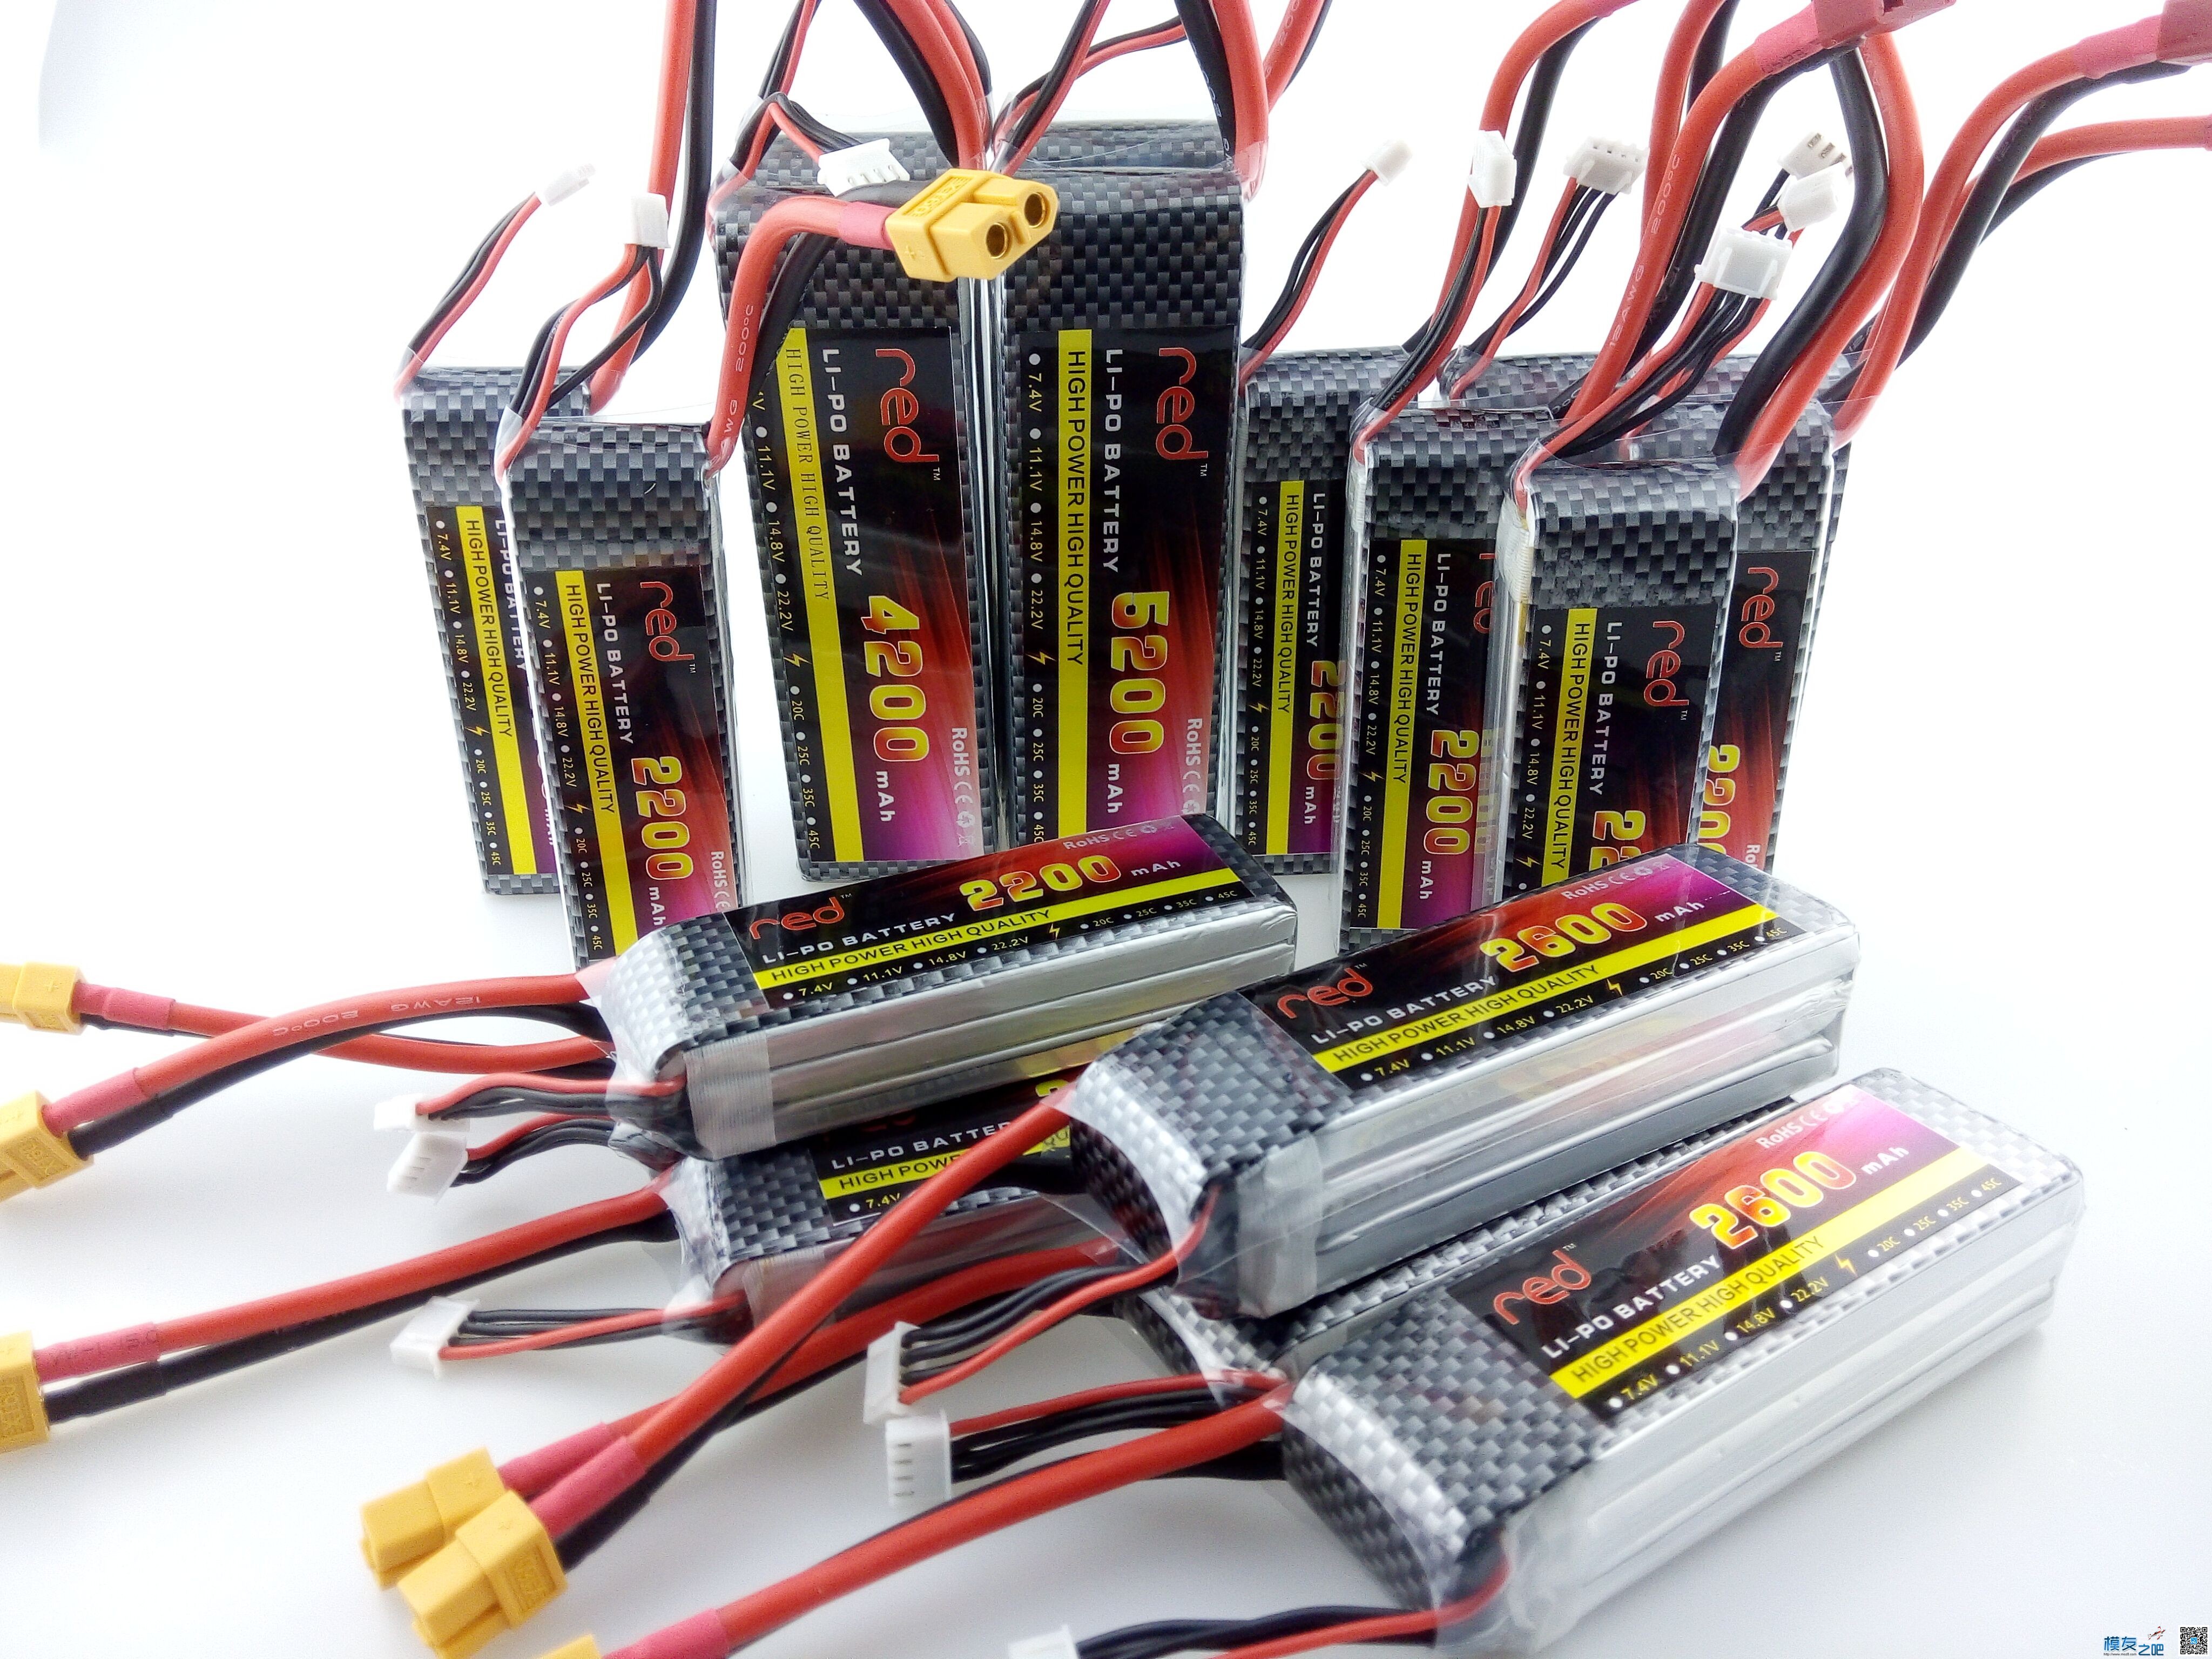 Red 红牌电池免费测试活动 电池,免费,精灵4 作者:飞天 5096 